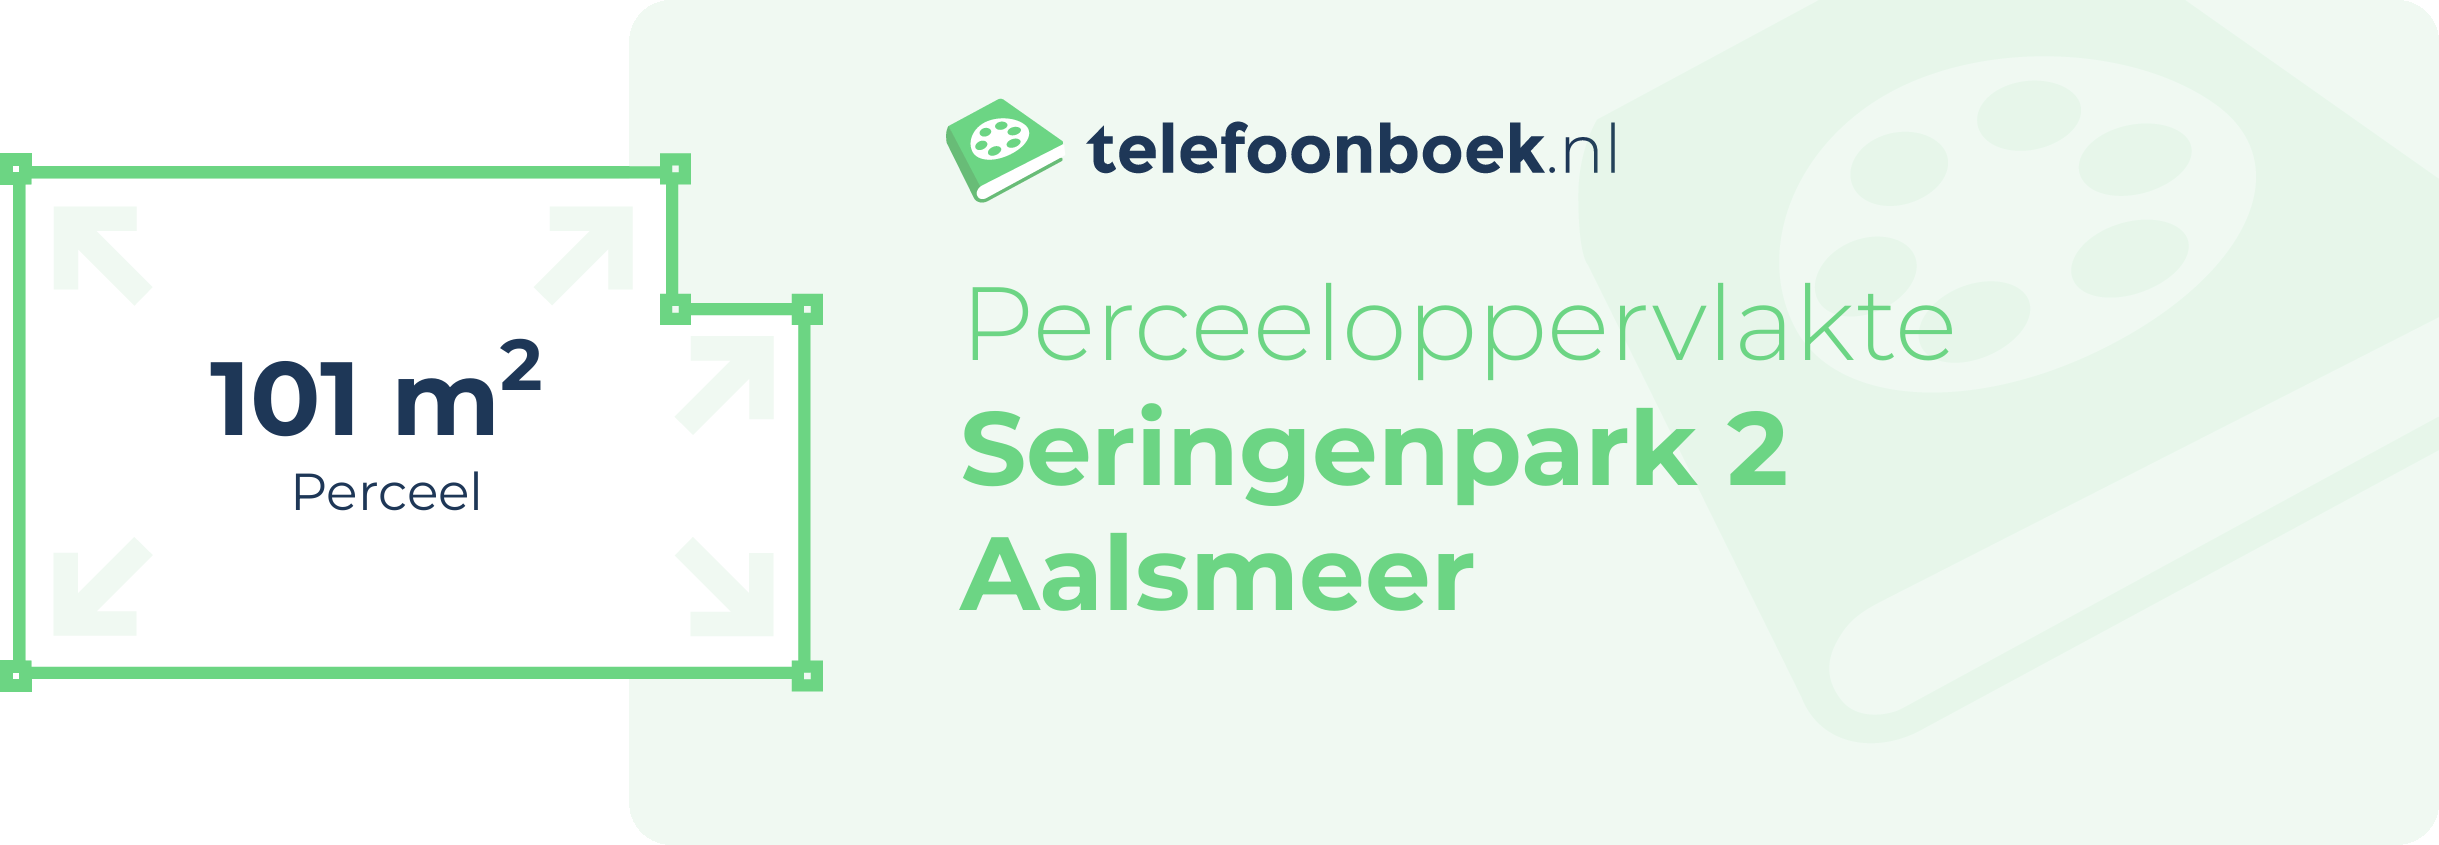 Perceeloppervlakte Seringenpark 2 Aalsmeer